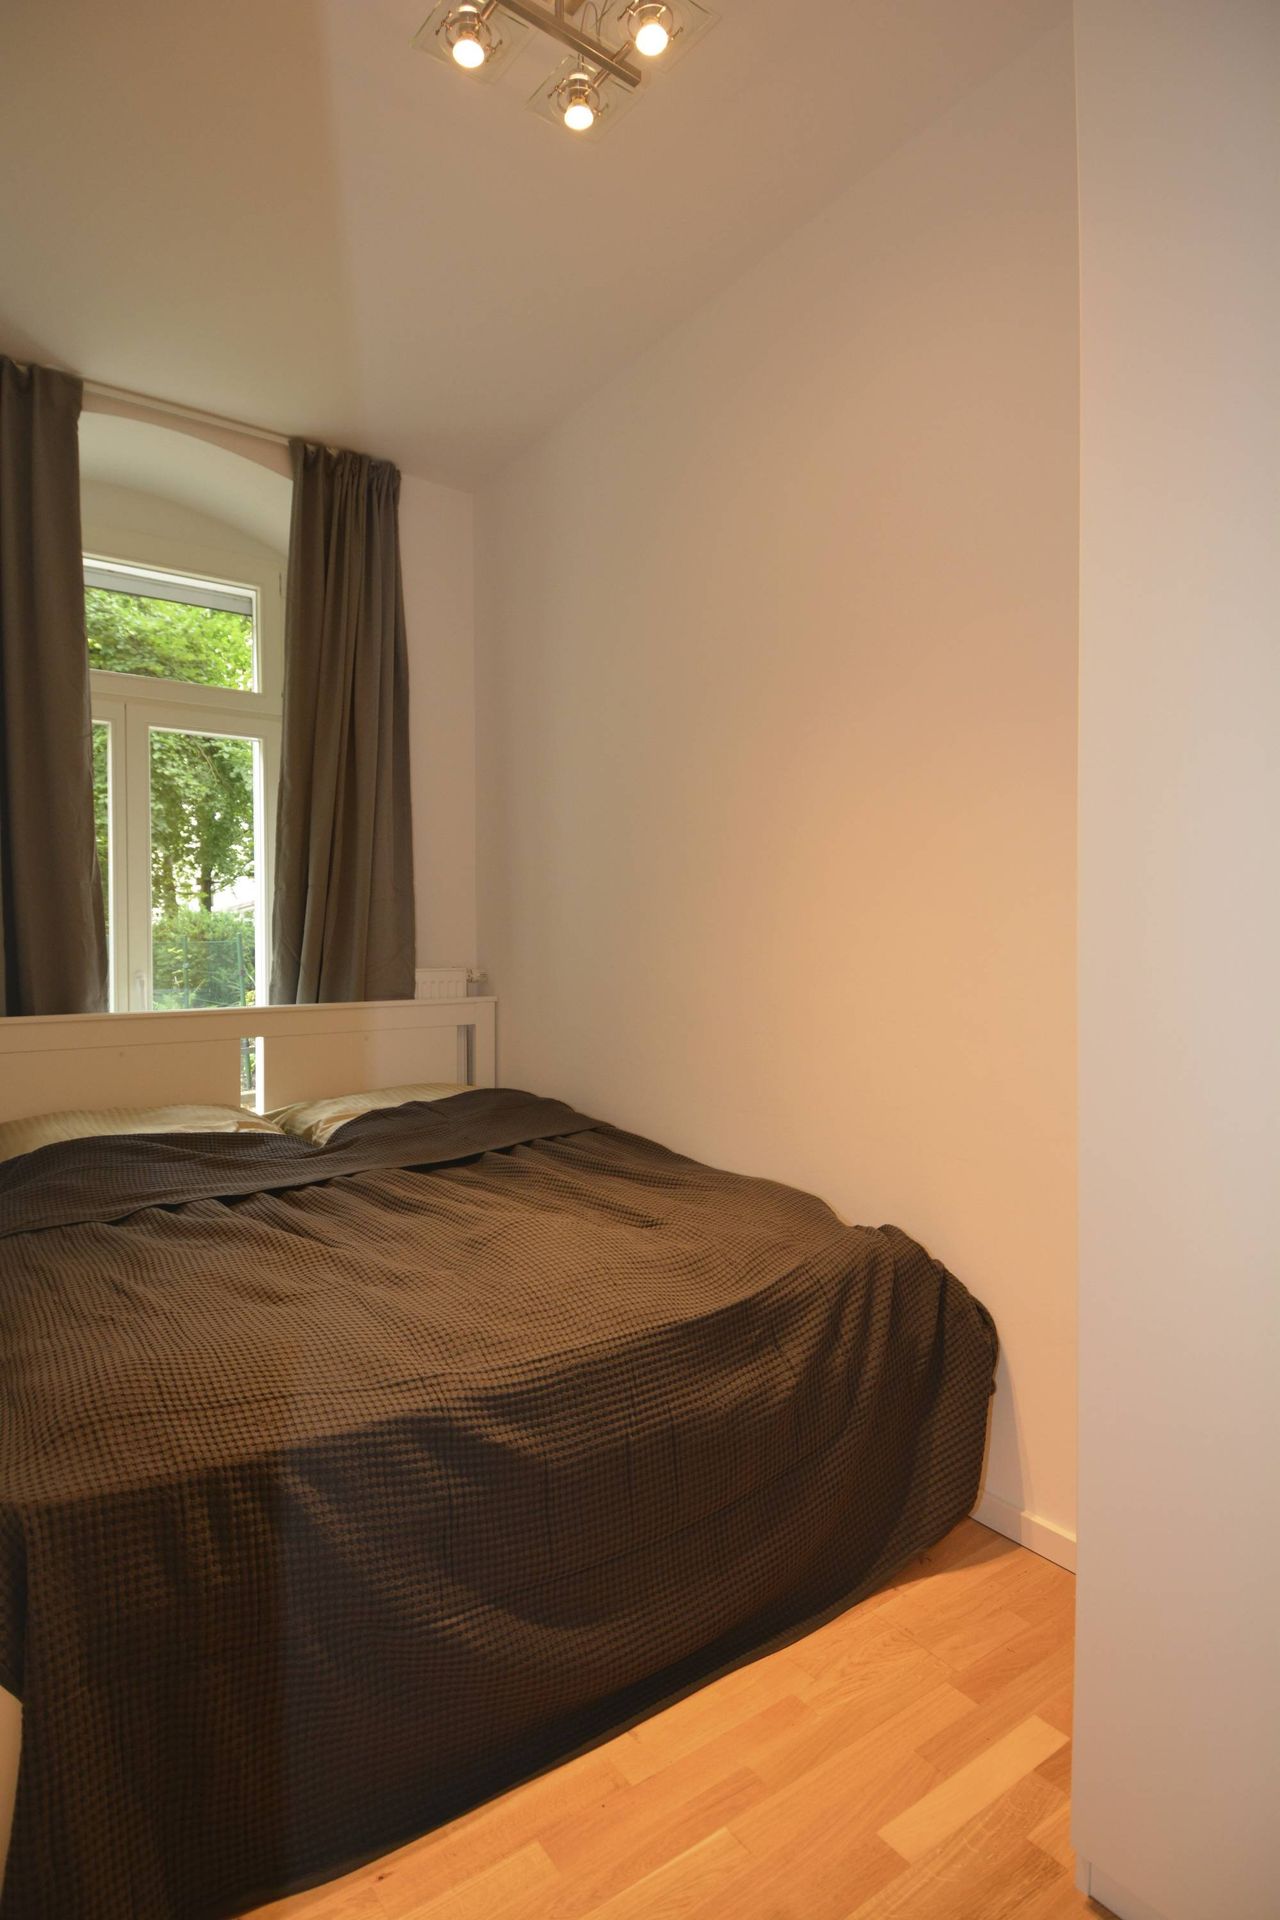 Modern, gorgeous flat in Prenzlauer Berg, Berlin